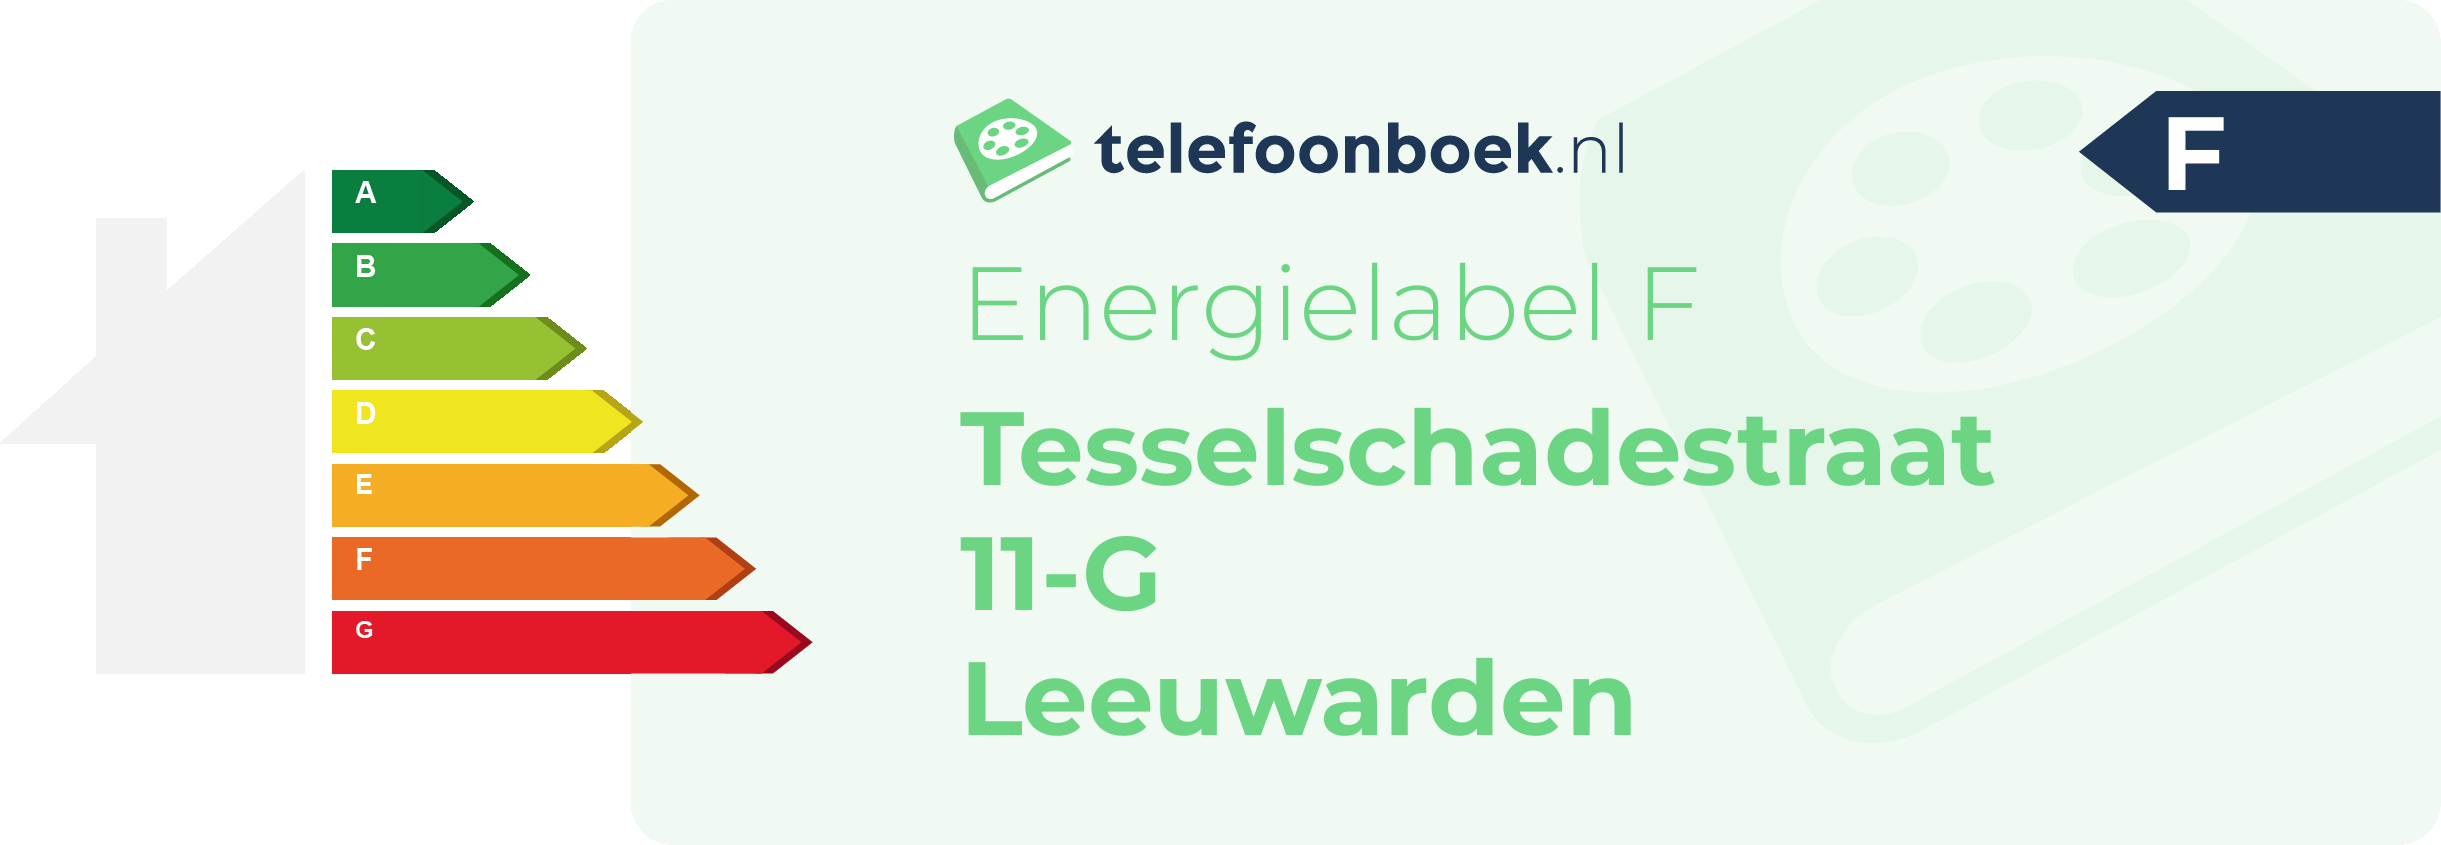 Energielabel Tesselschadestraat 11-G Leeuwarden